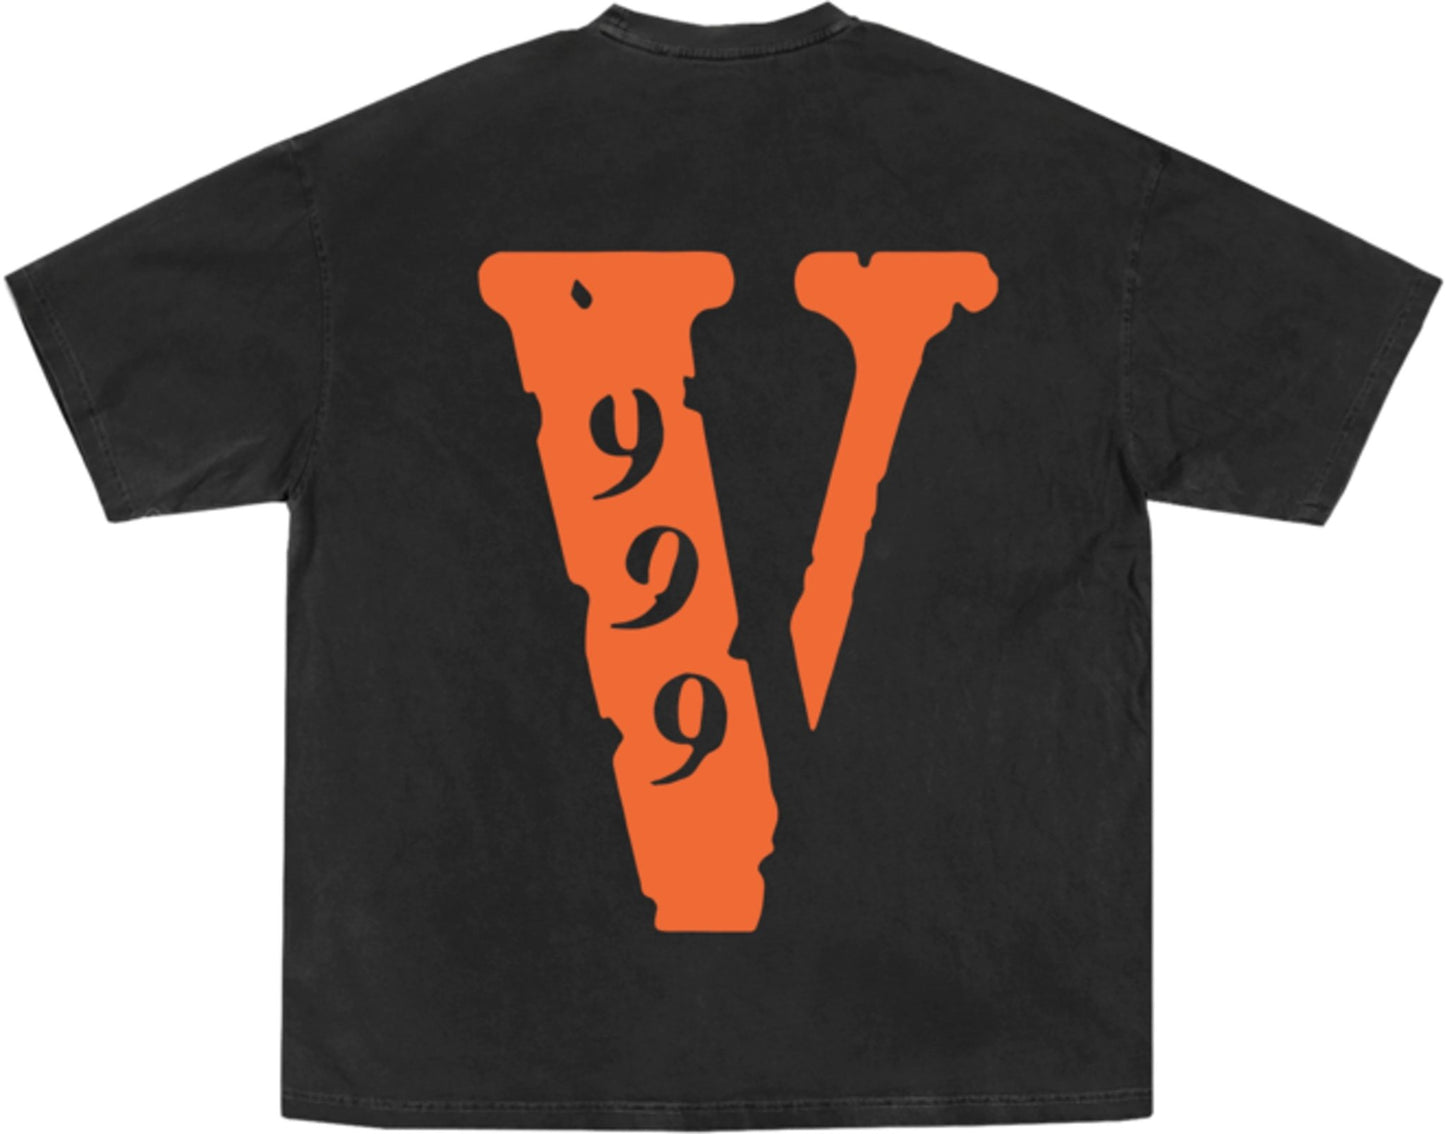 Vlone x Juice Wrld Butterfly T-Shirt Black - Supra Sneakers